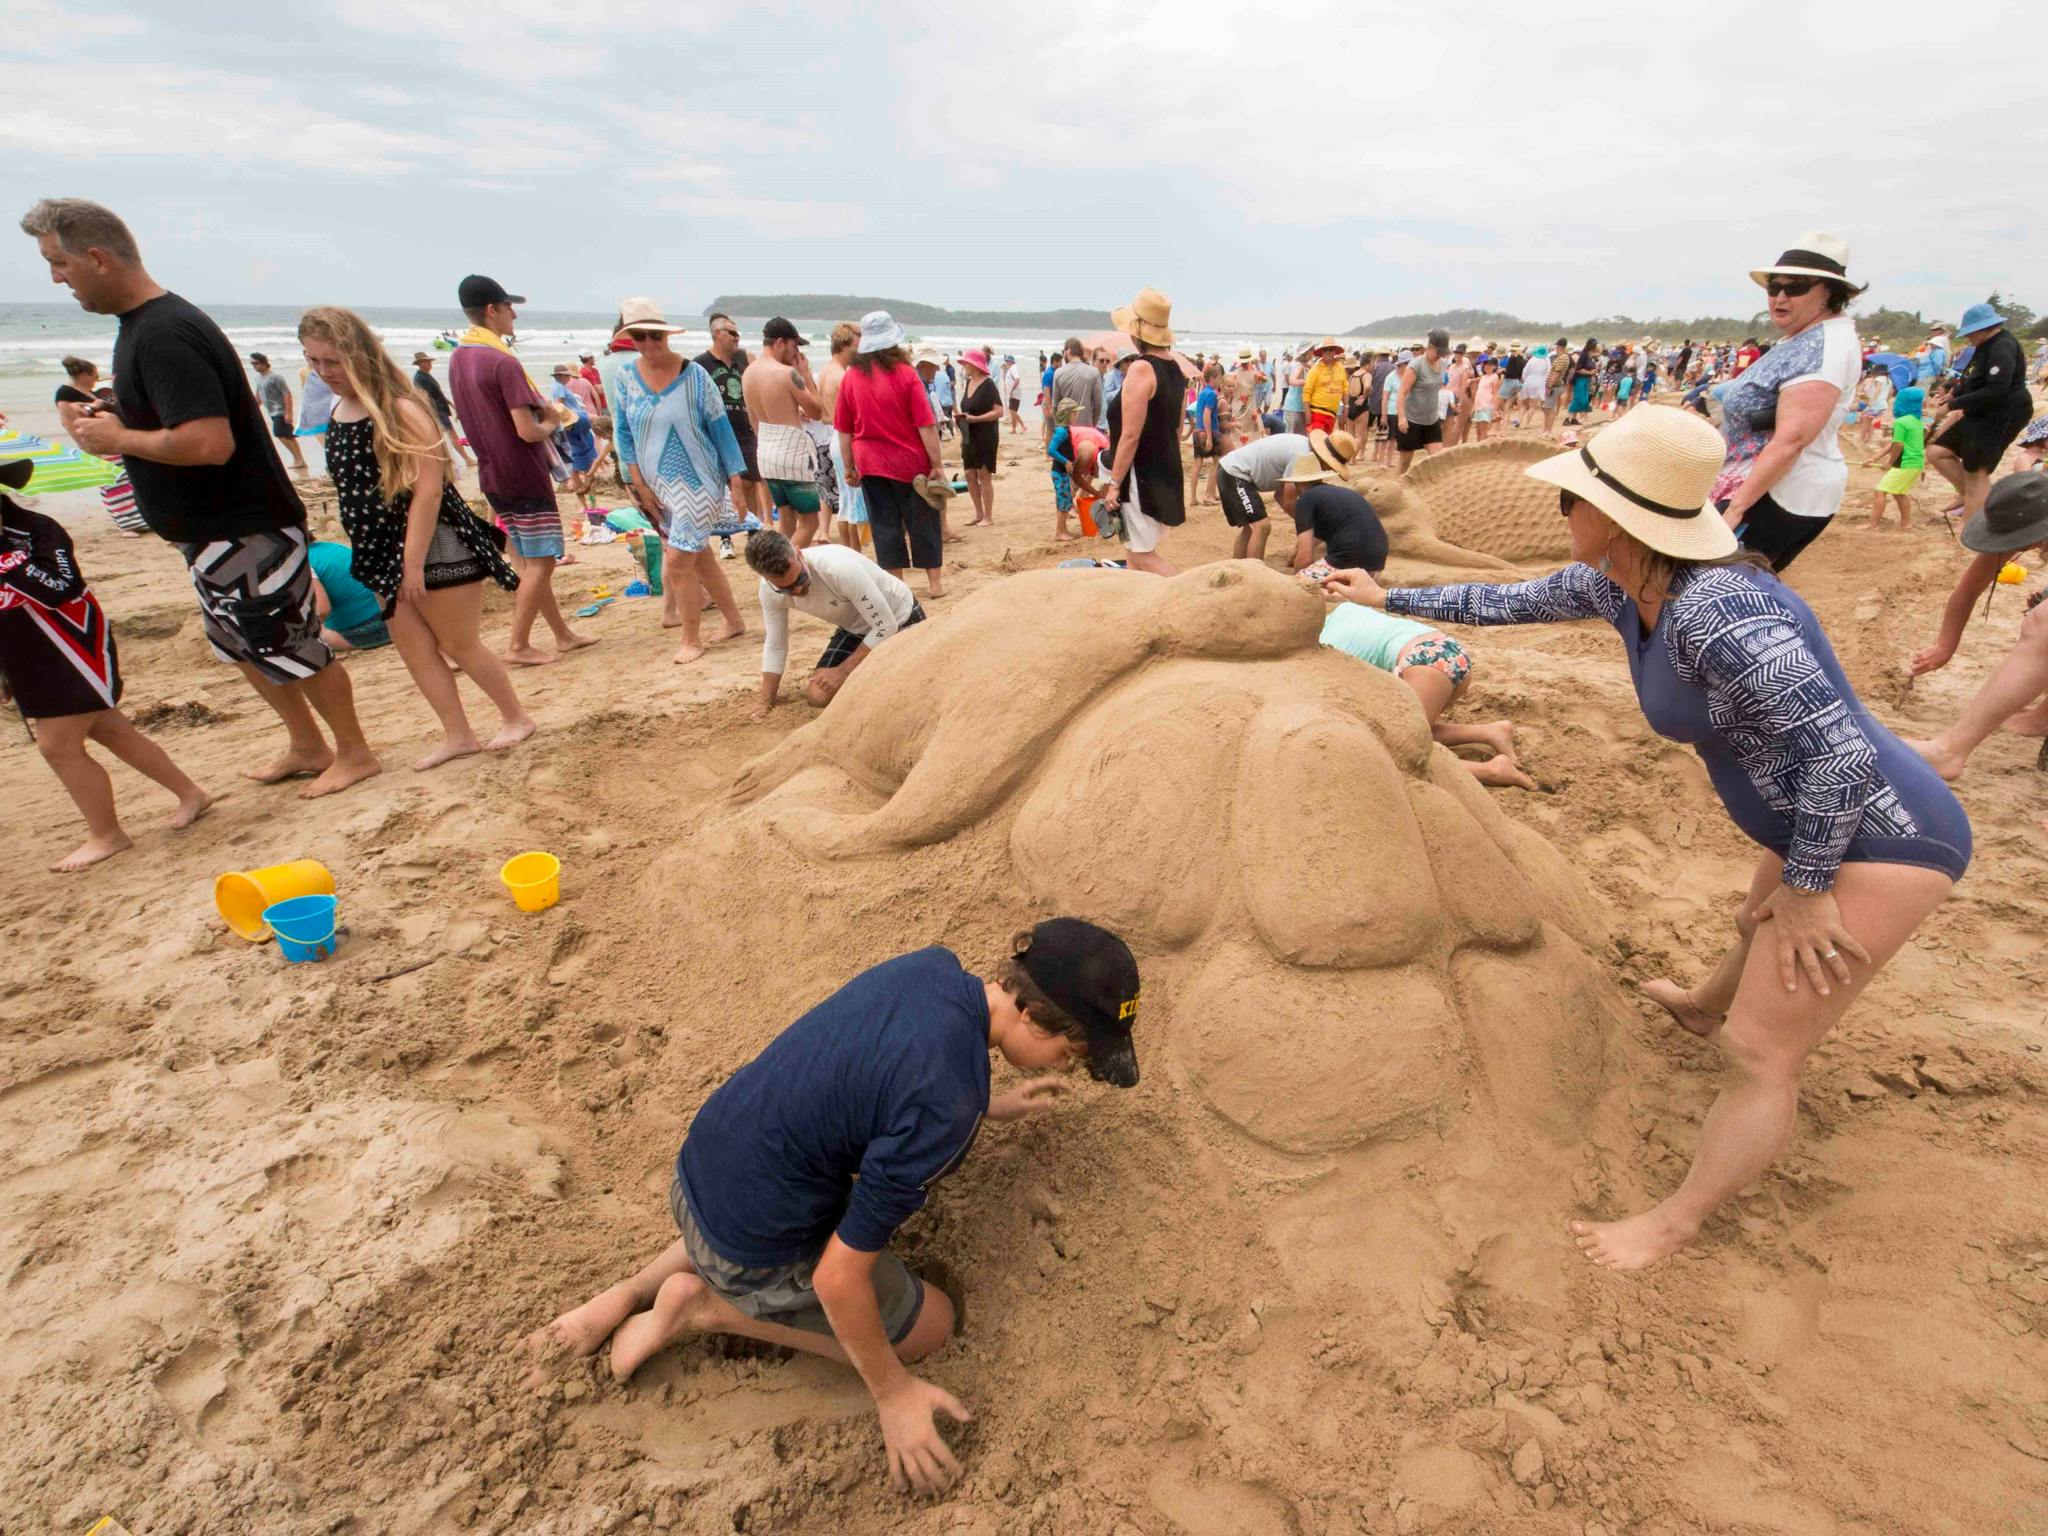 Lazy Seal sand sculpture being built